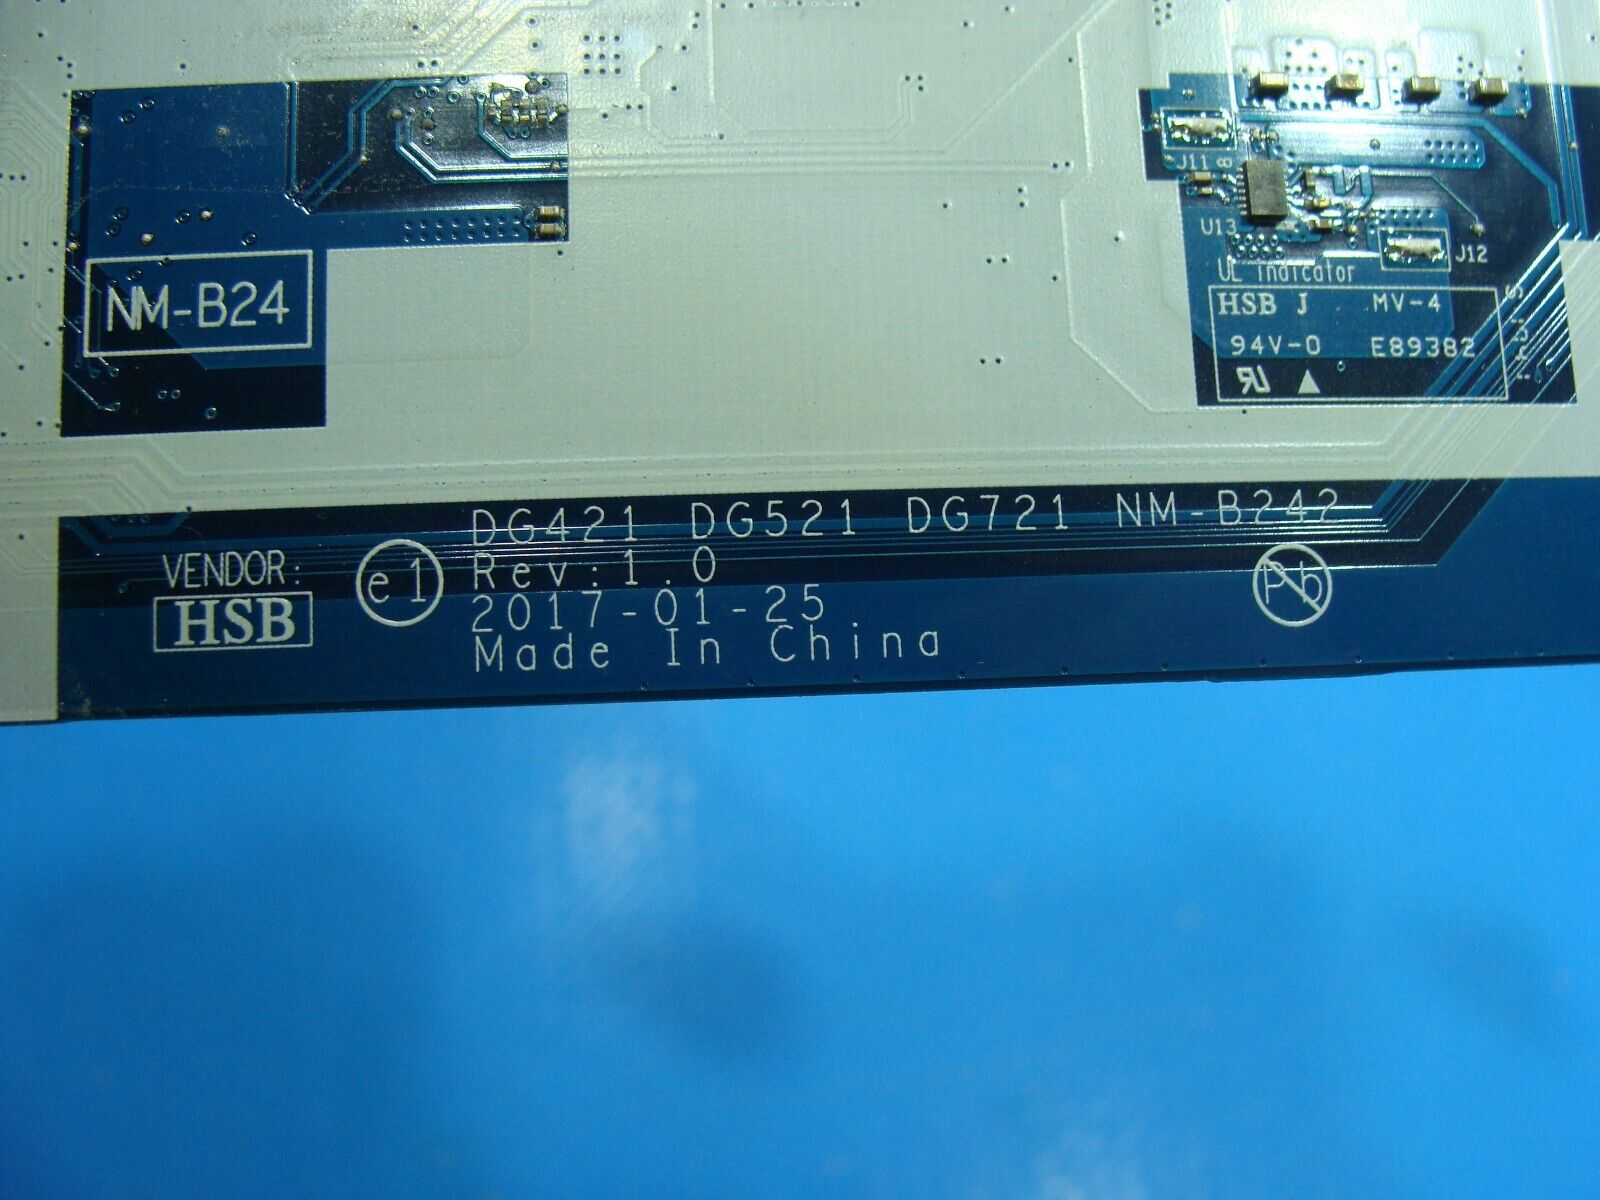 Lenovo IdeaPad 320-15IKB 15.6 Intel i7-7500u Motherboard 5B20N86580 AS IS